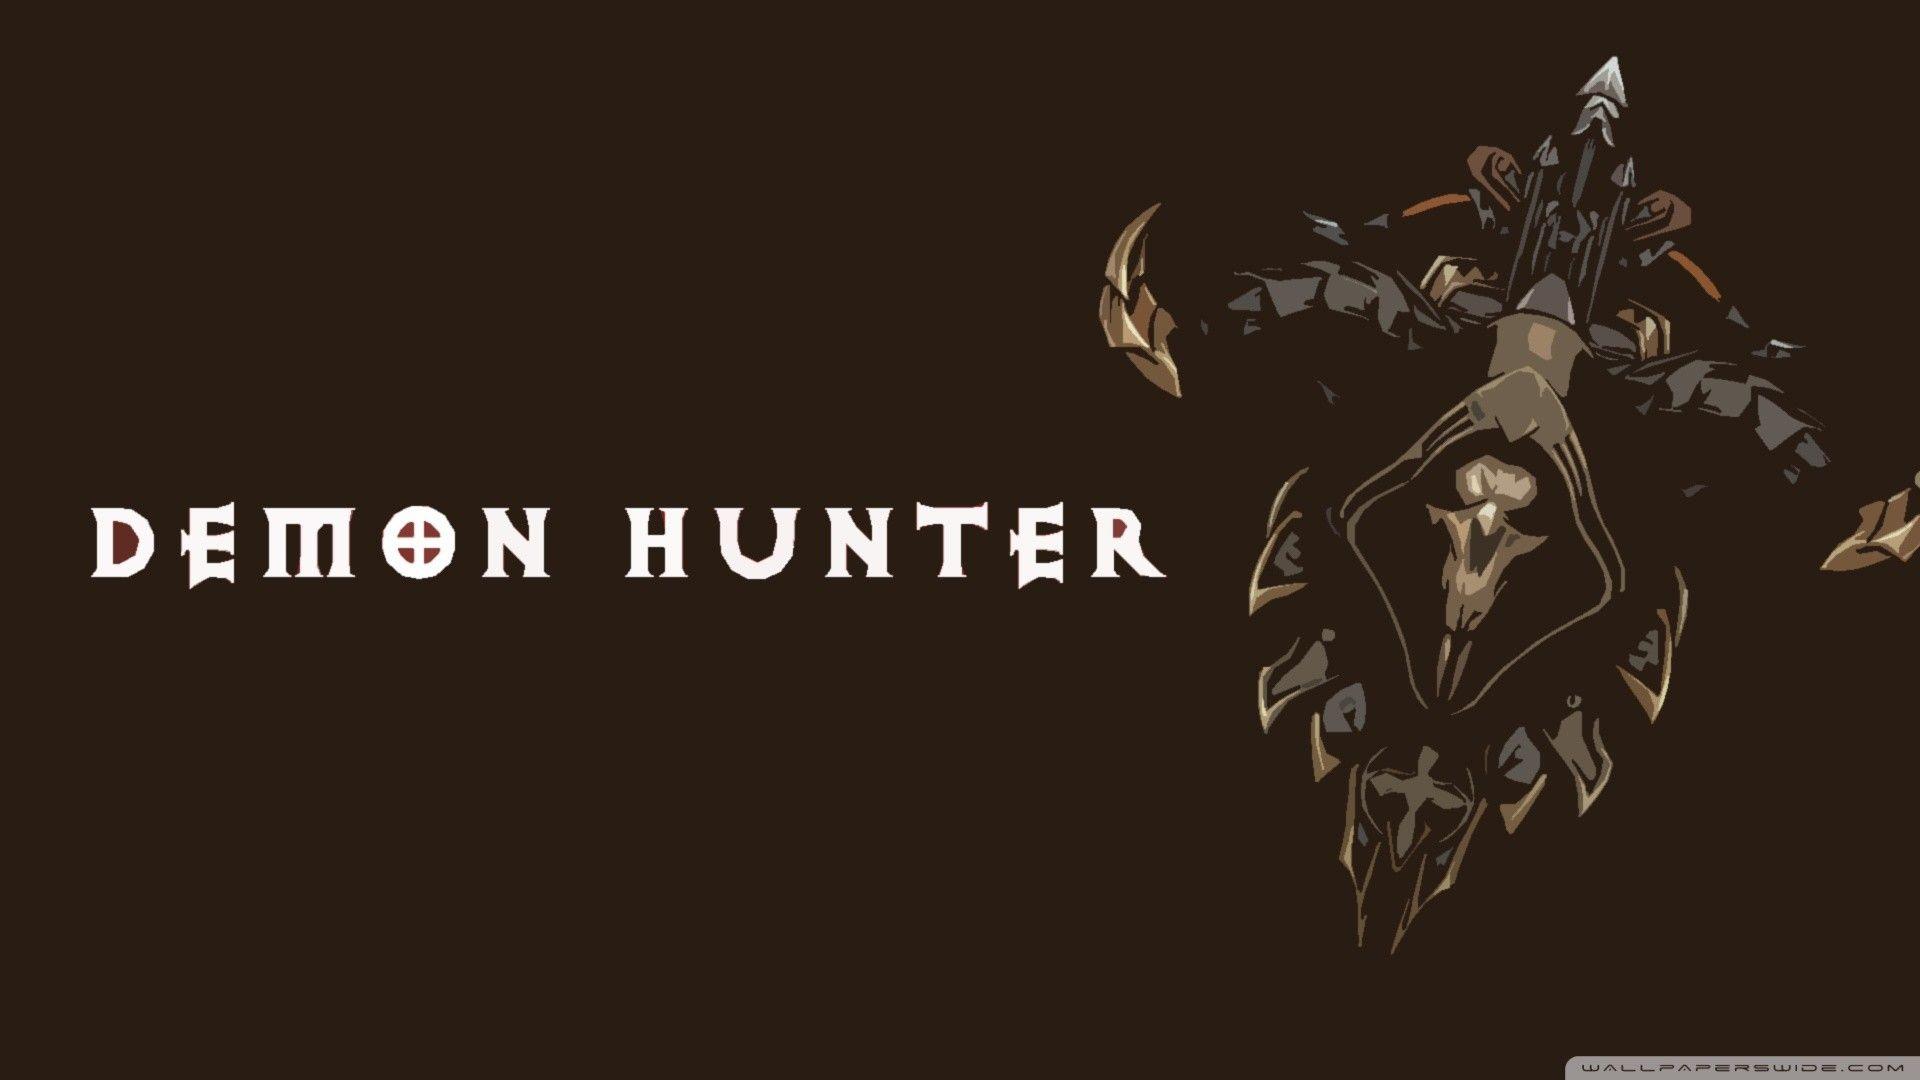 Demon Hunter Band Wallpaper Hd